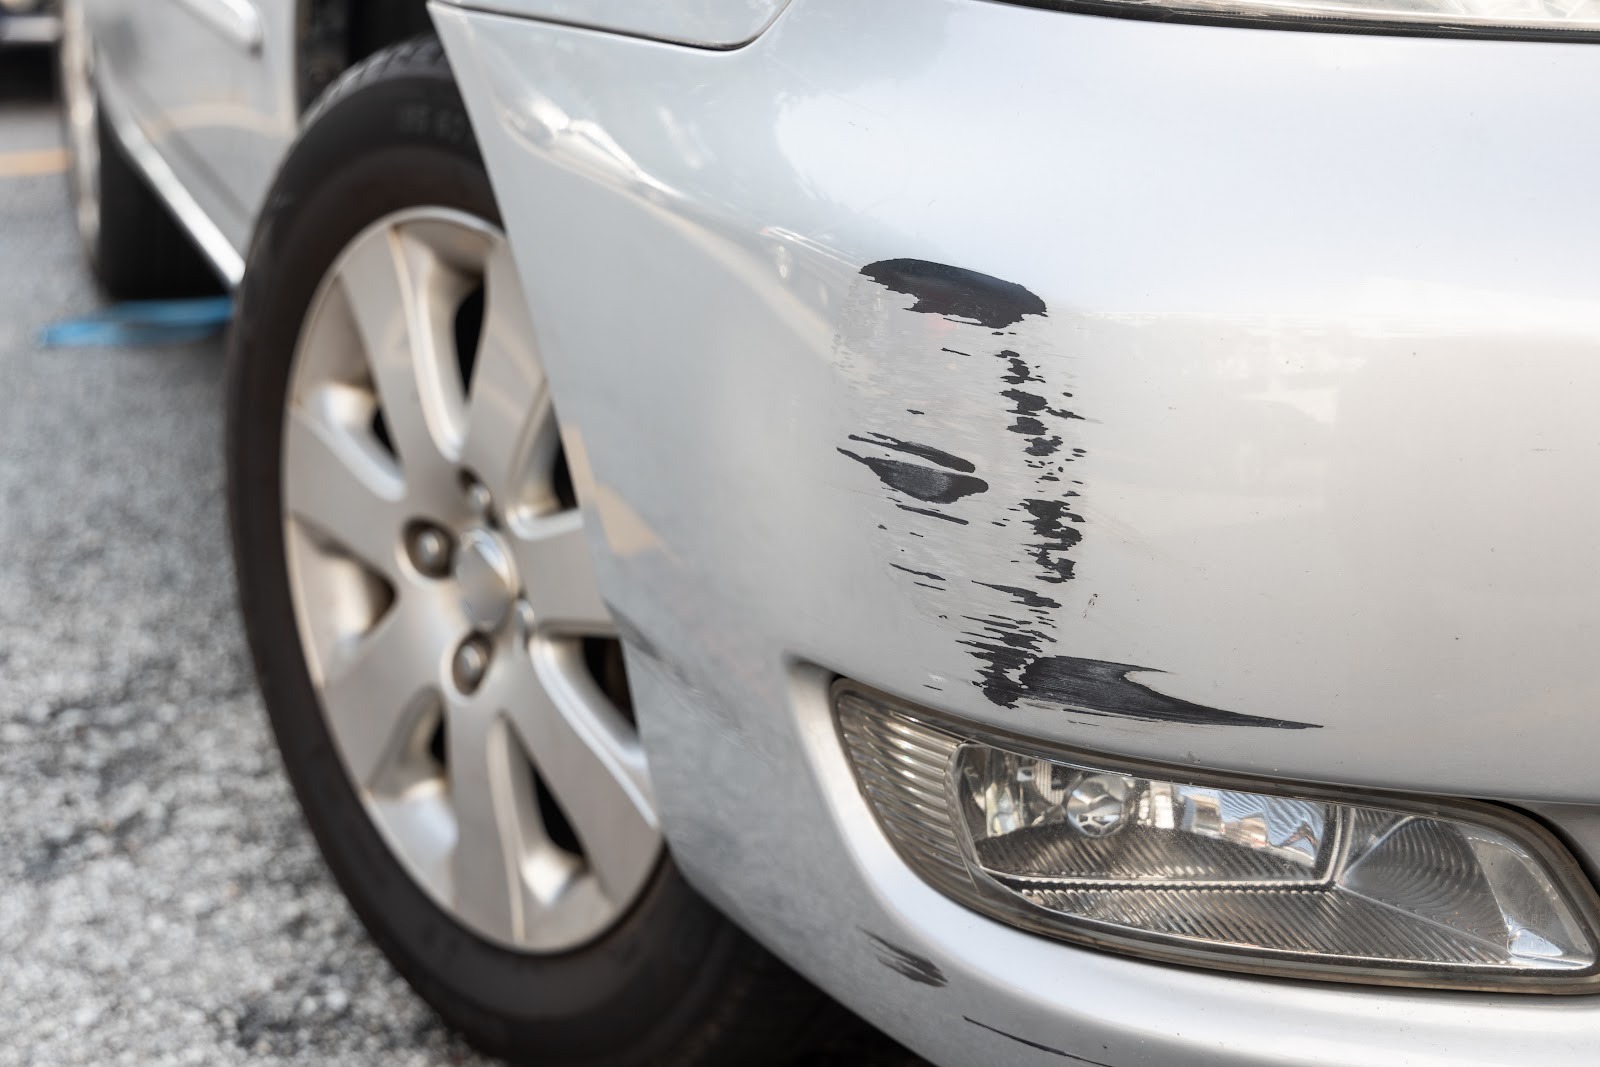 car paint scratch repair